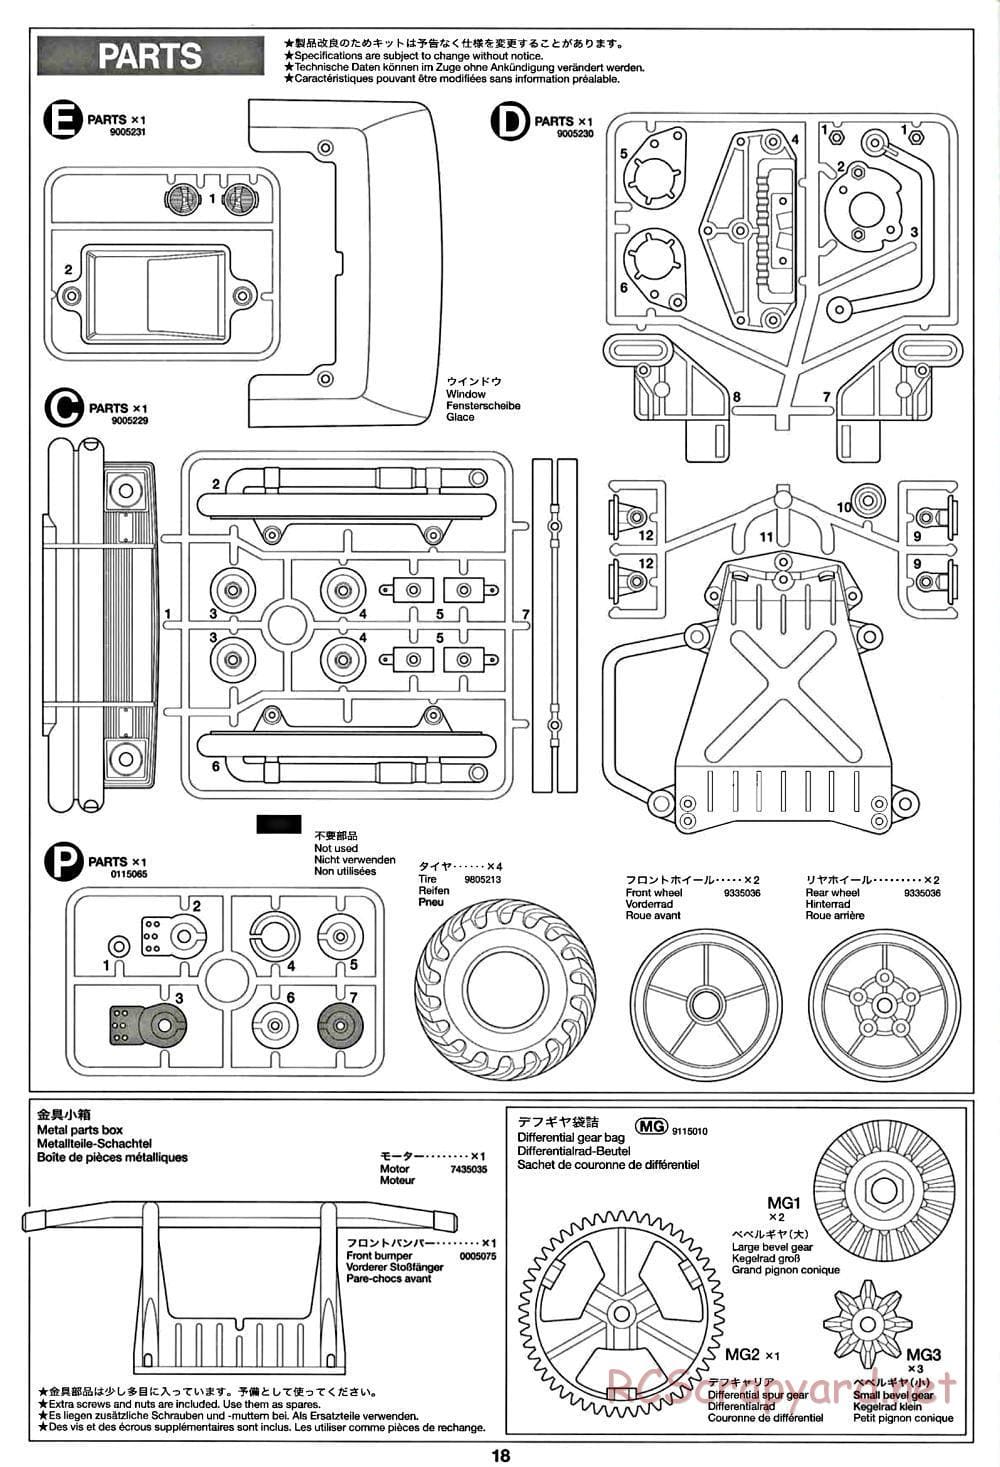 Tamiya - CW-01 Chassis - Manual - Page 18